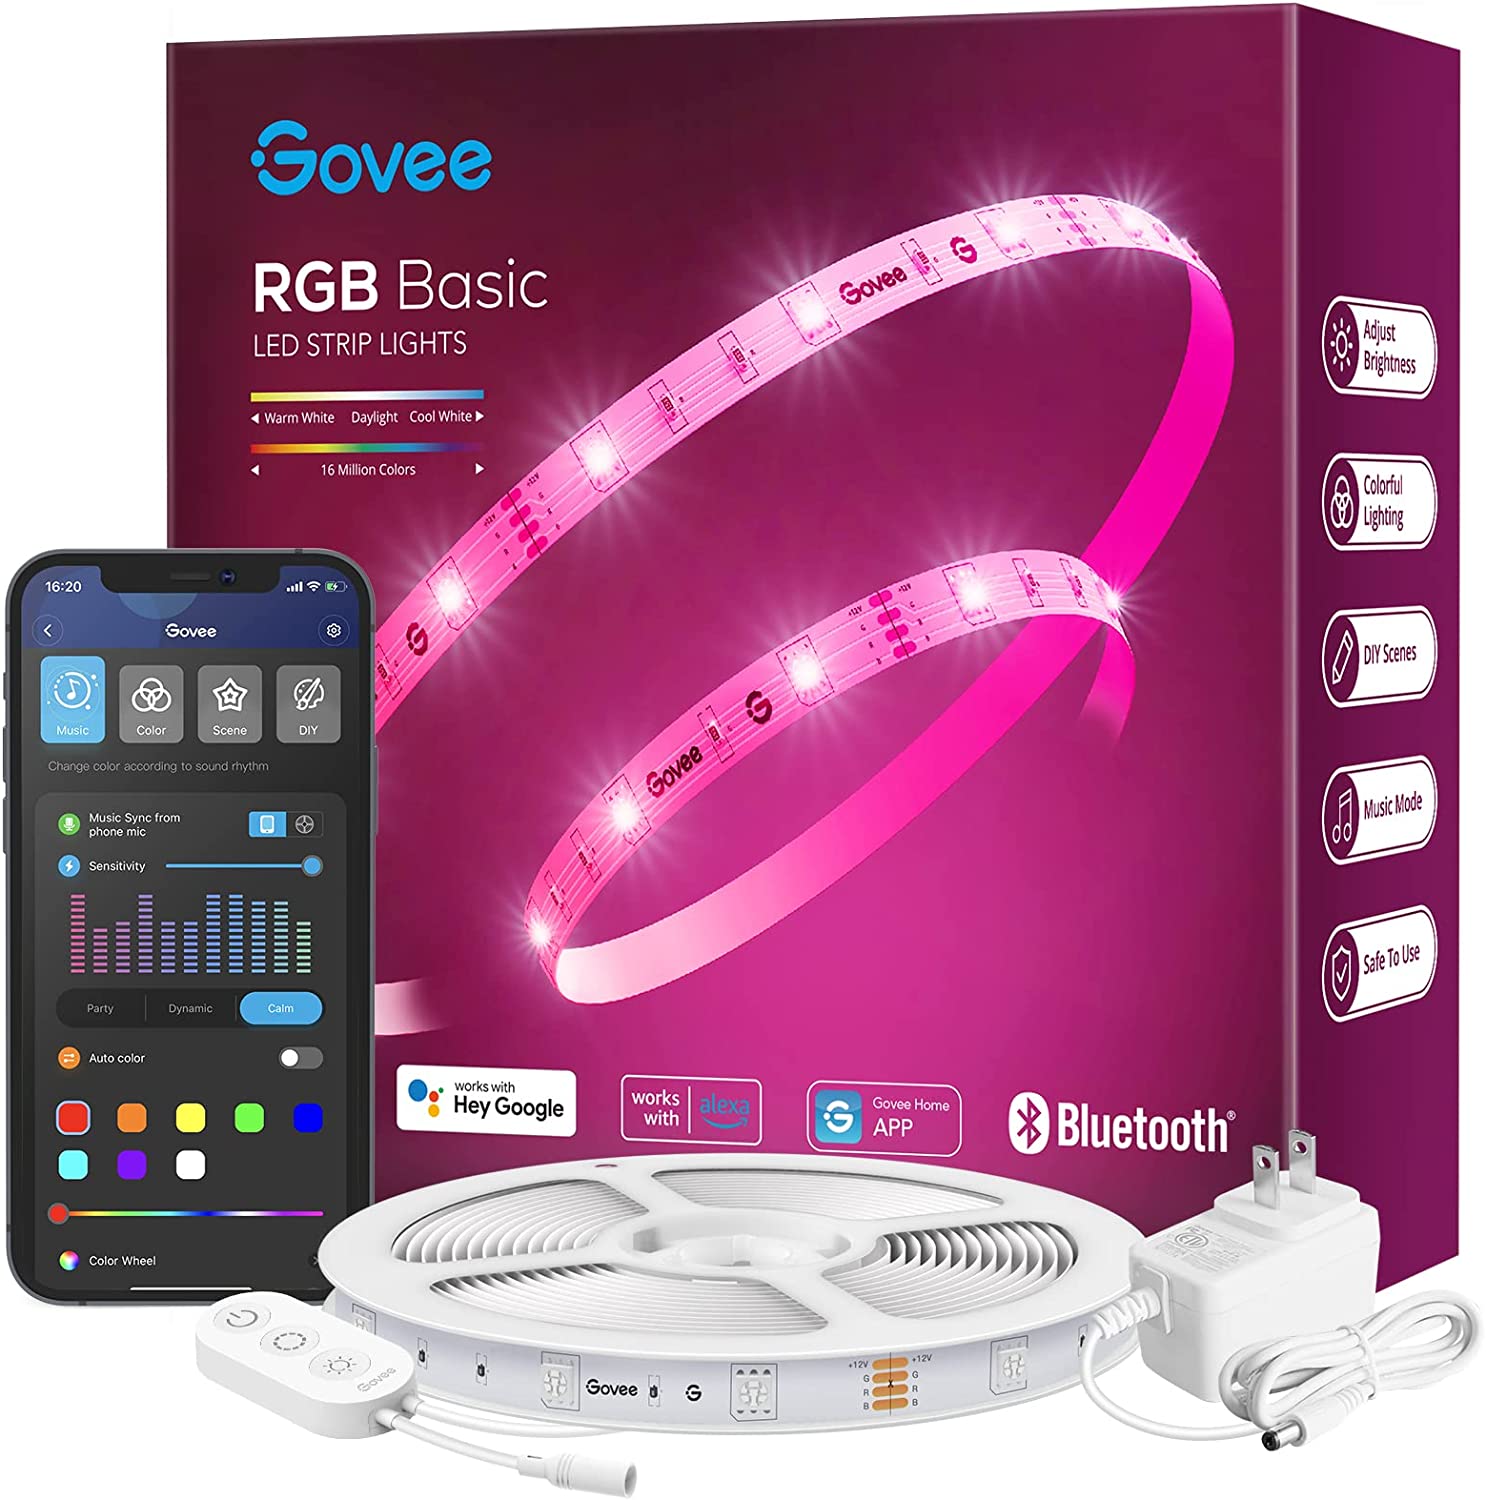 Govee RGBIC/RGB LED Strip Lights: 32.8' Govee RGB LED Strip Lights